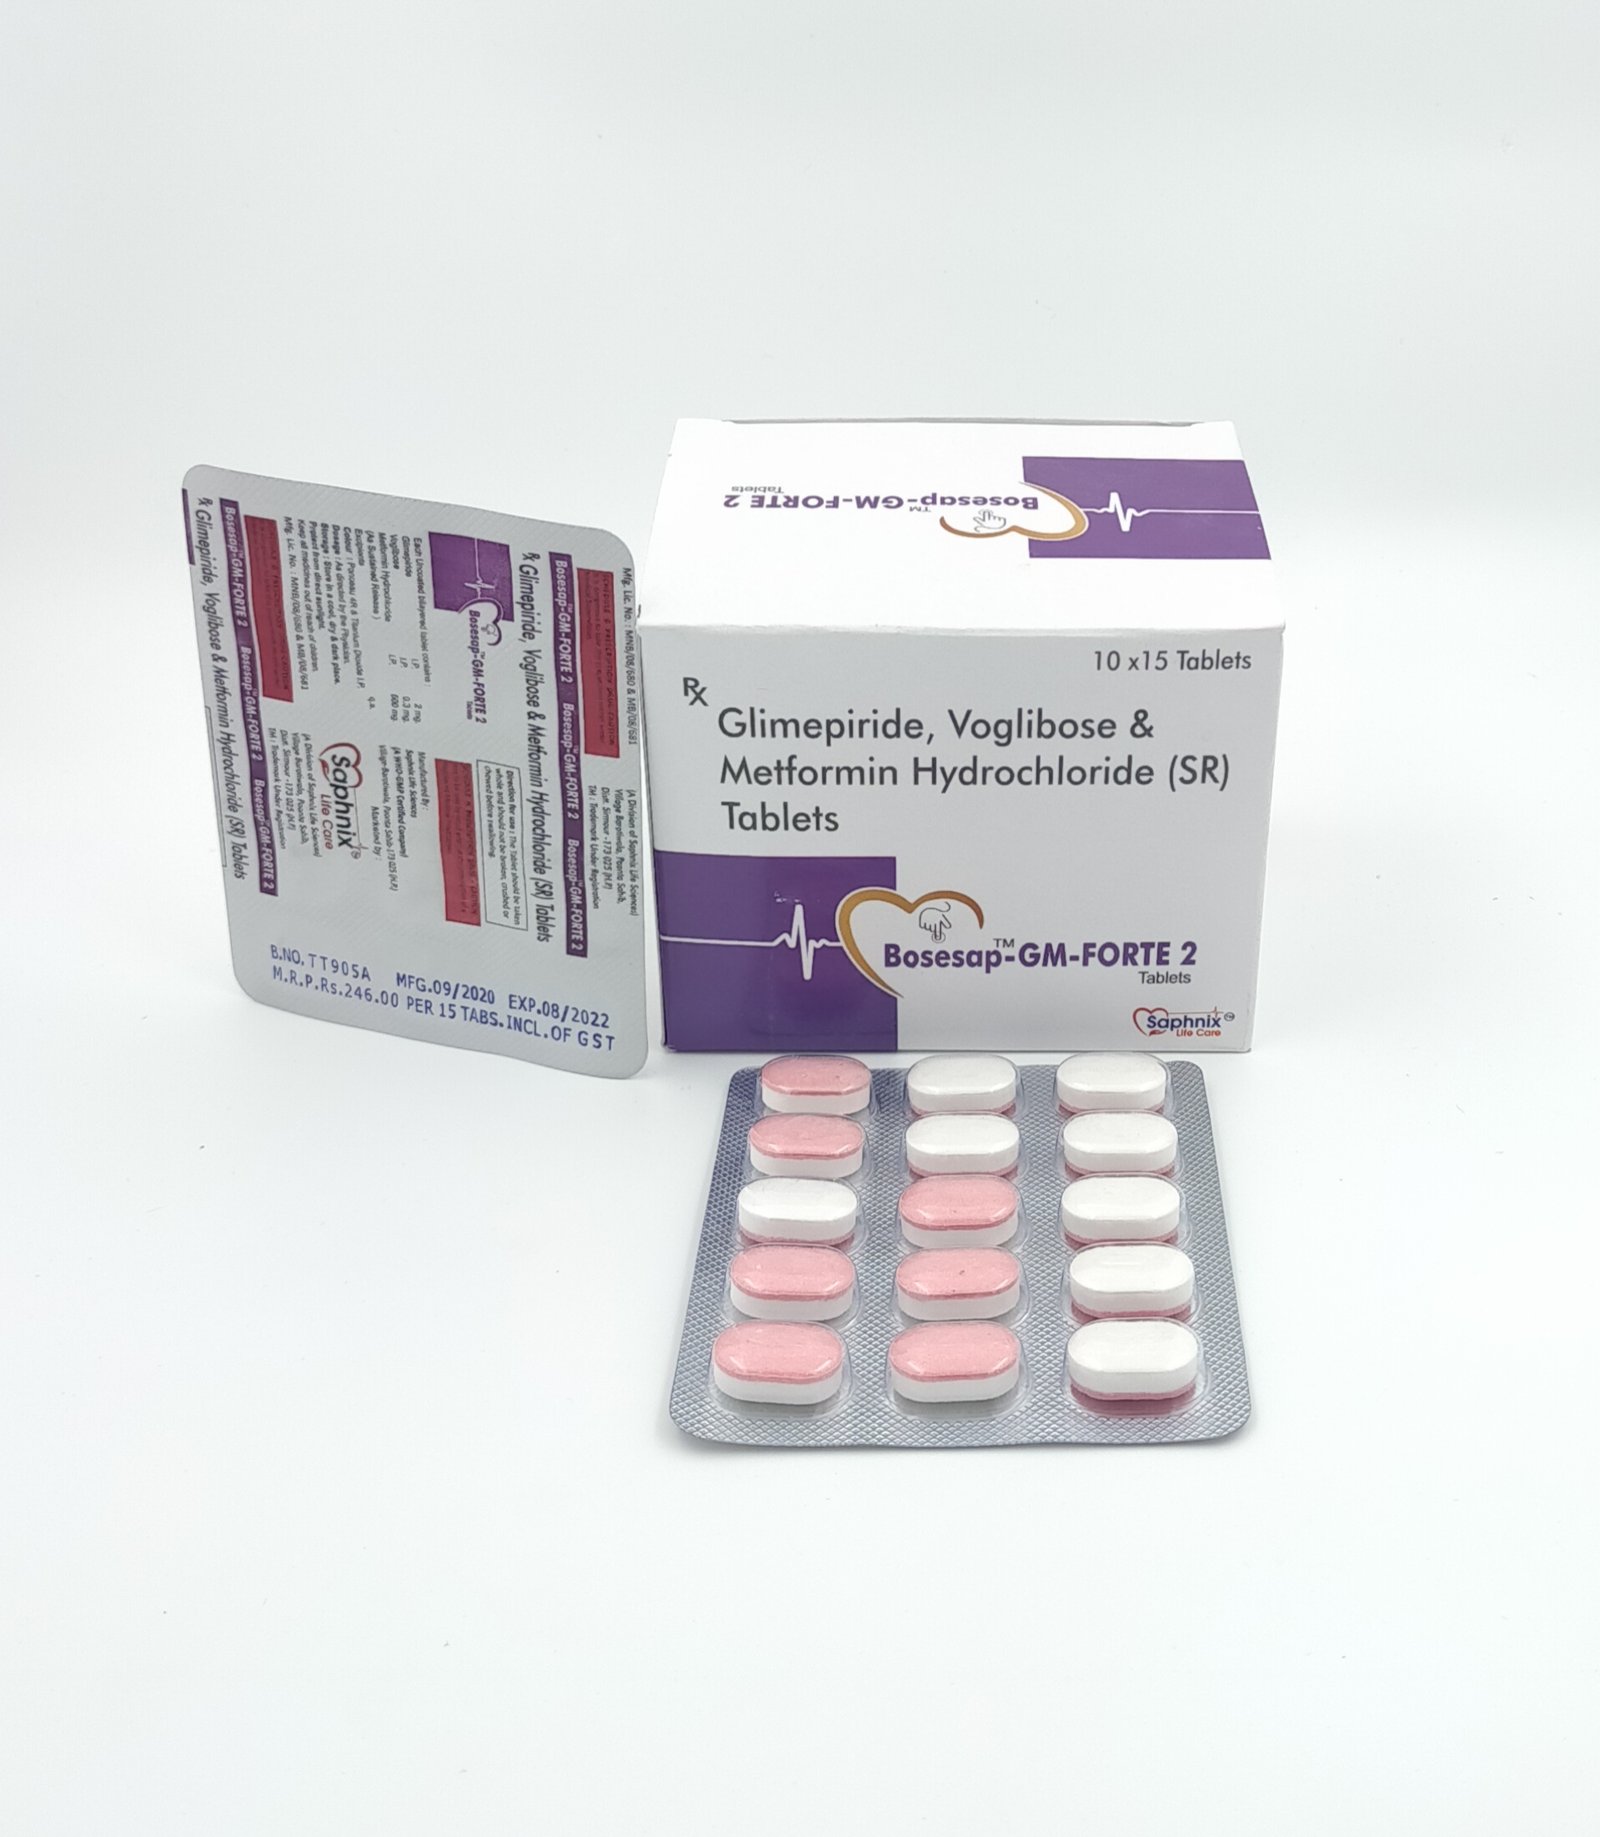 Glimepiride, Voglibose and Metformin Hydrochloride Tablets